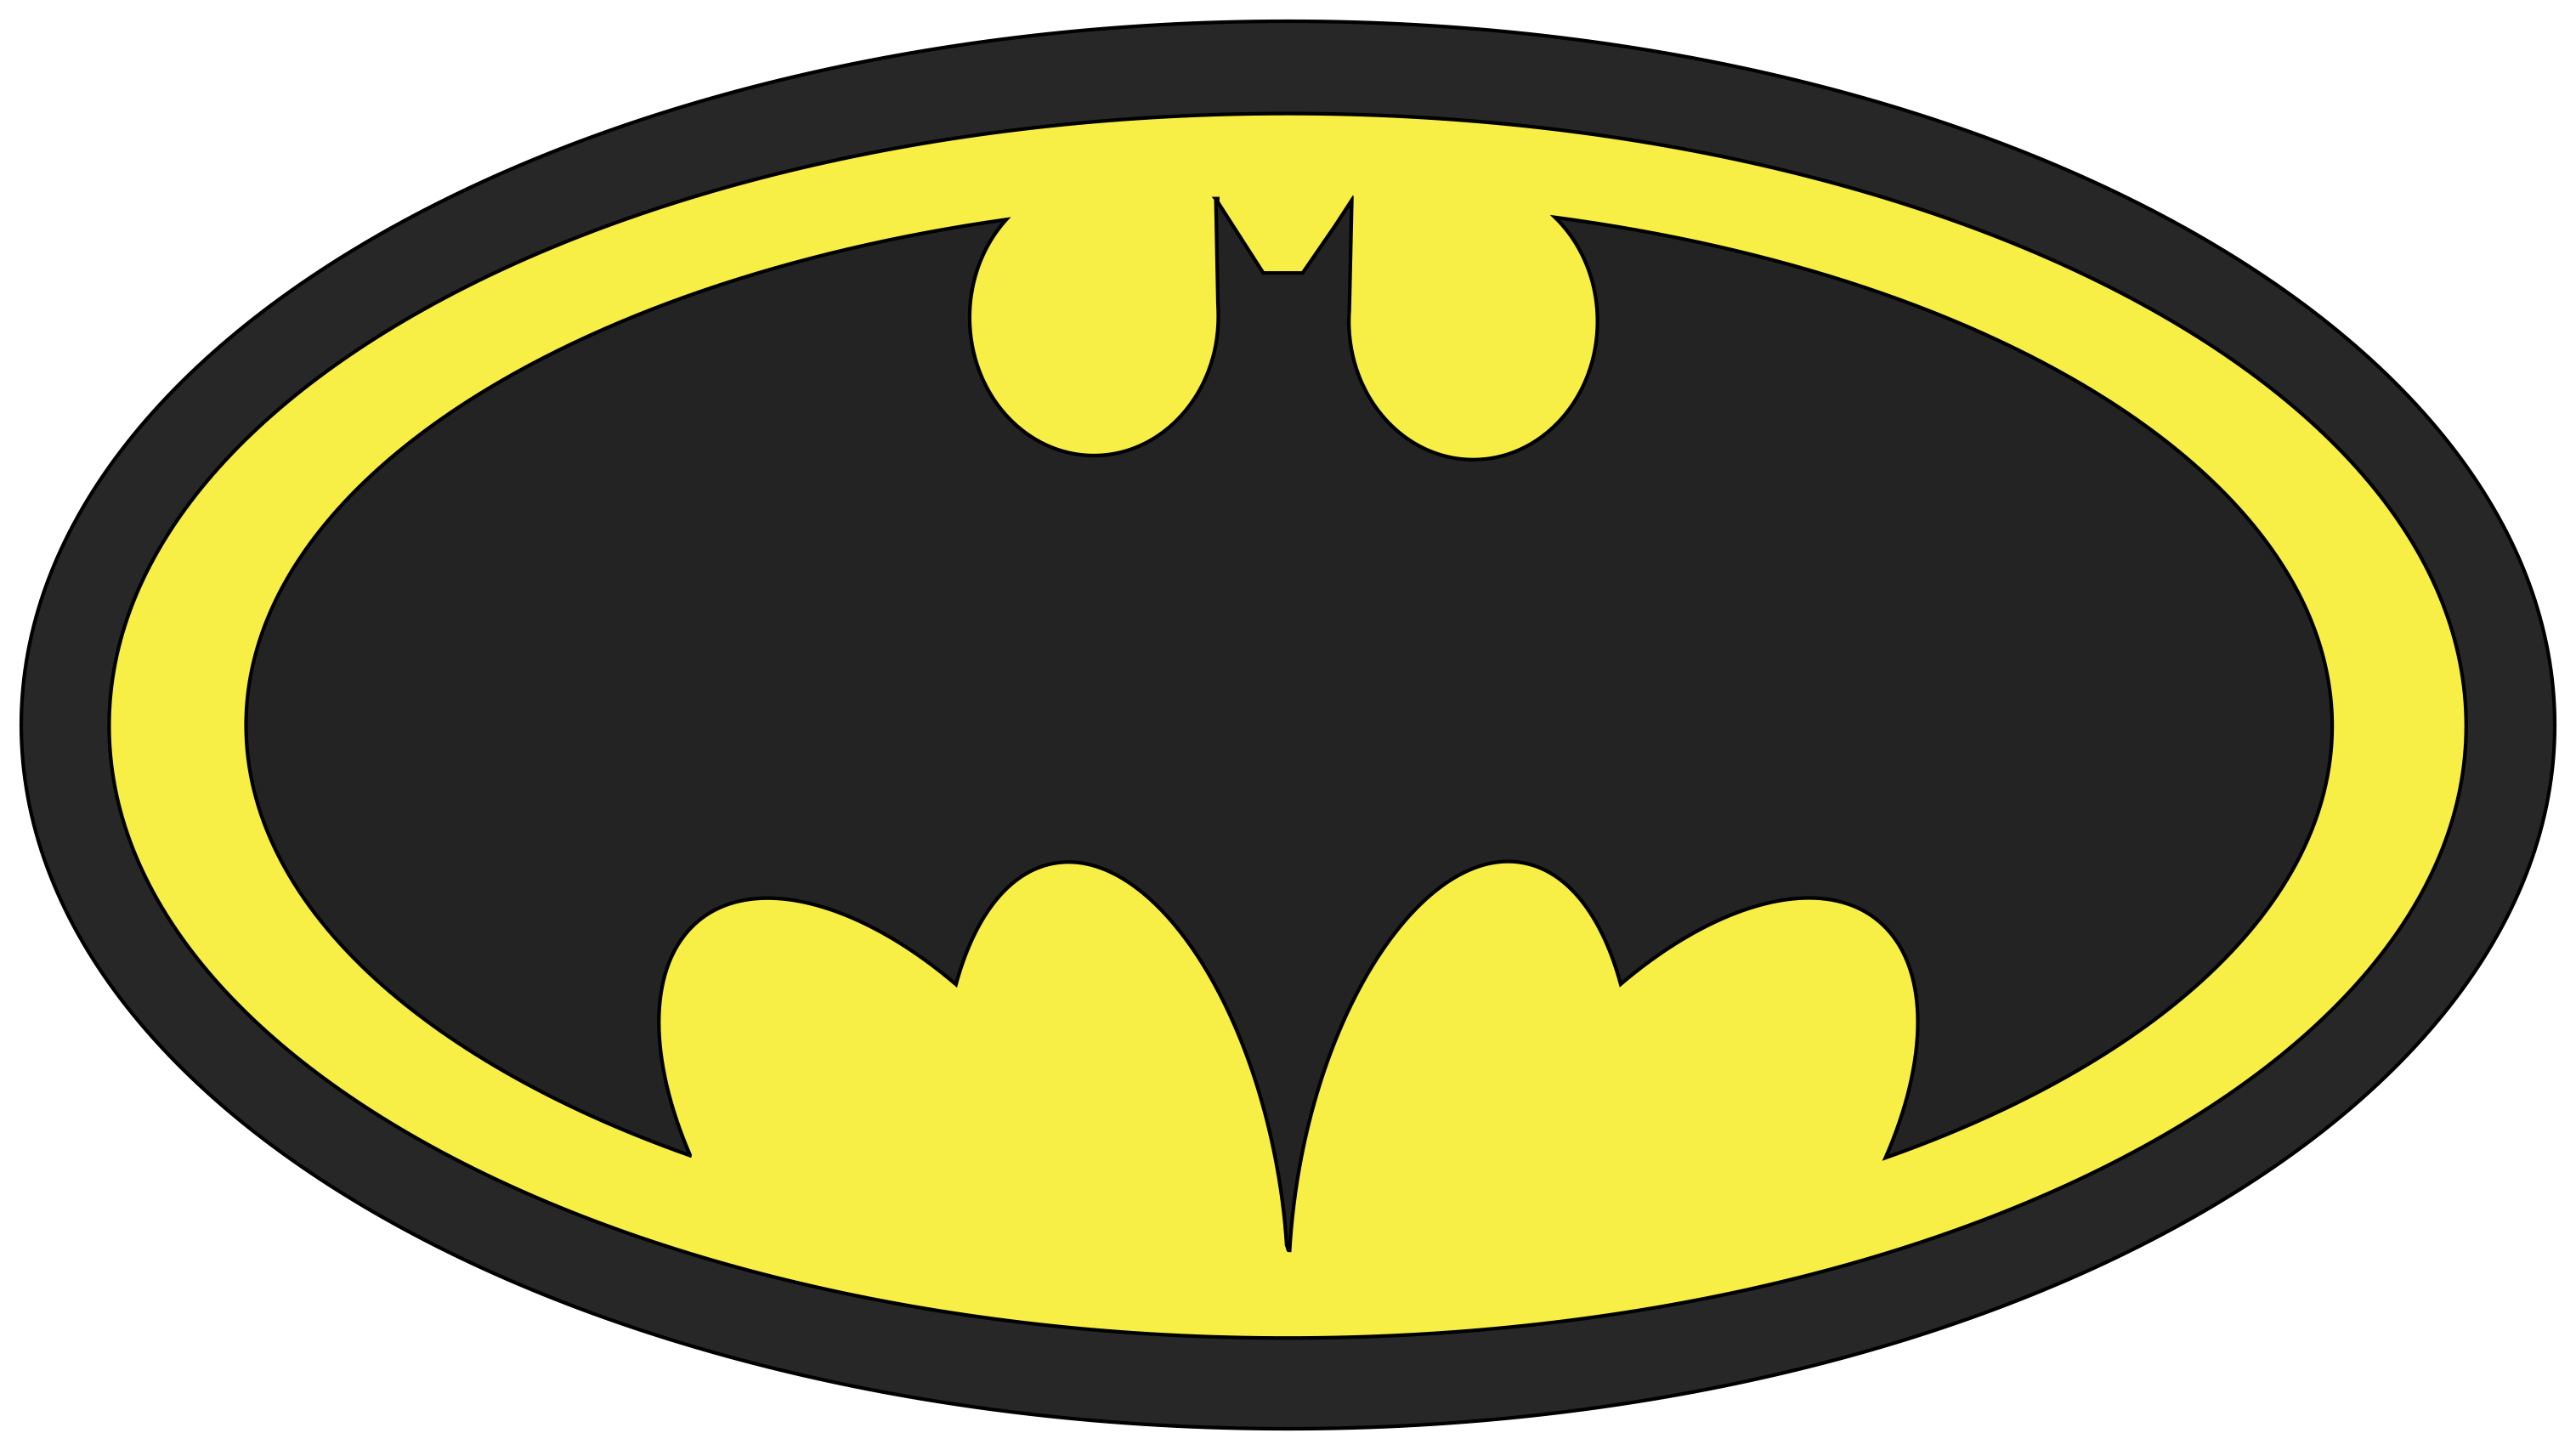 Batman Logo PNG Image - PurePNG | Free transparent CC0 PNG ...